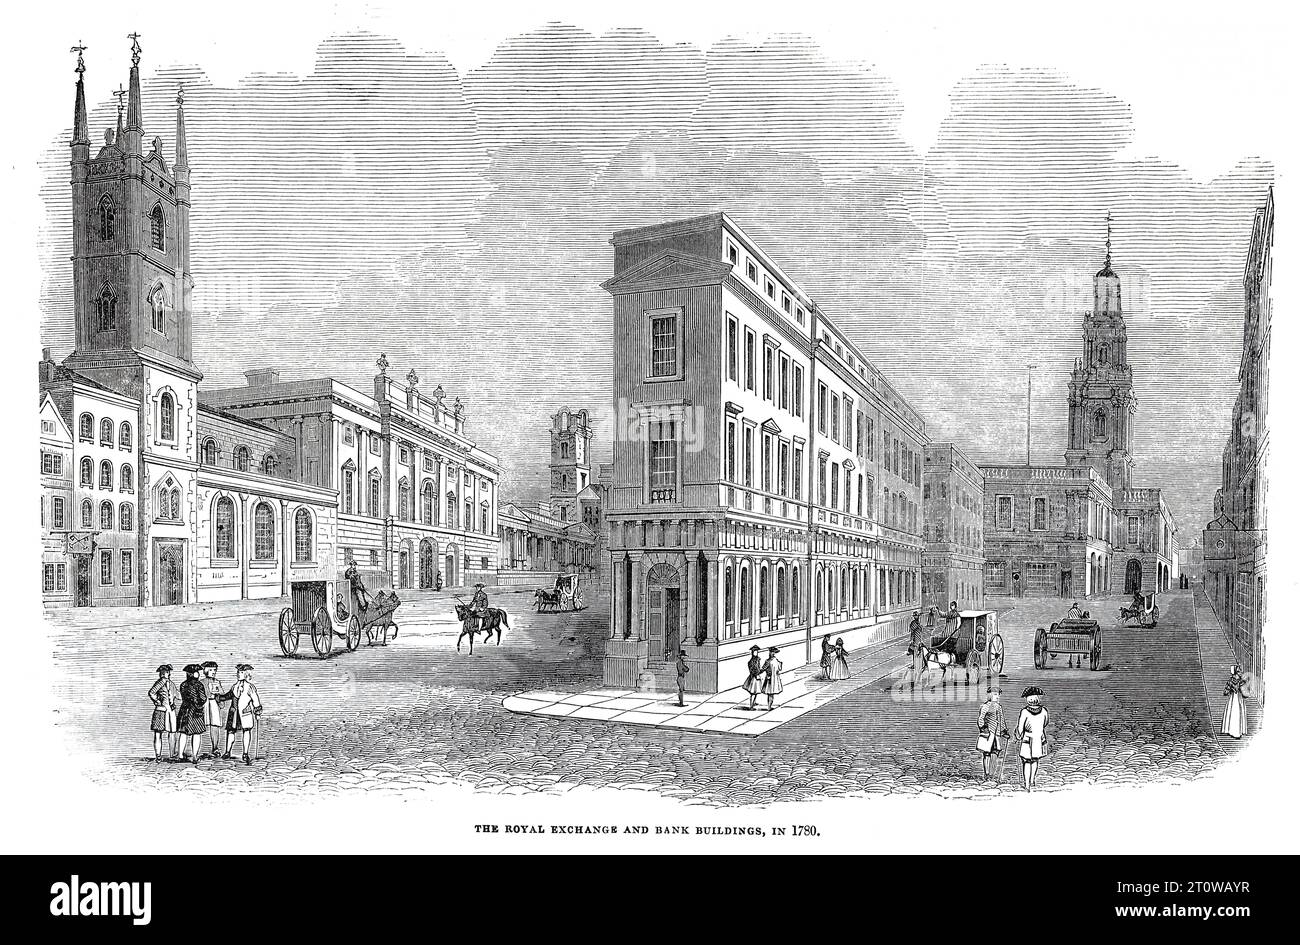 The Royal Exchange and Bank Buildings, Londres en 1780. Illustration en noir et blanc du London Illustrated News ; 1844. Banque D'Images